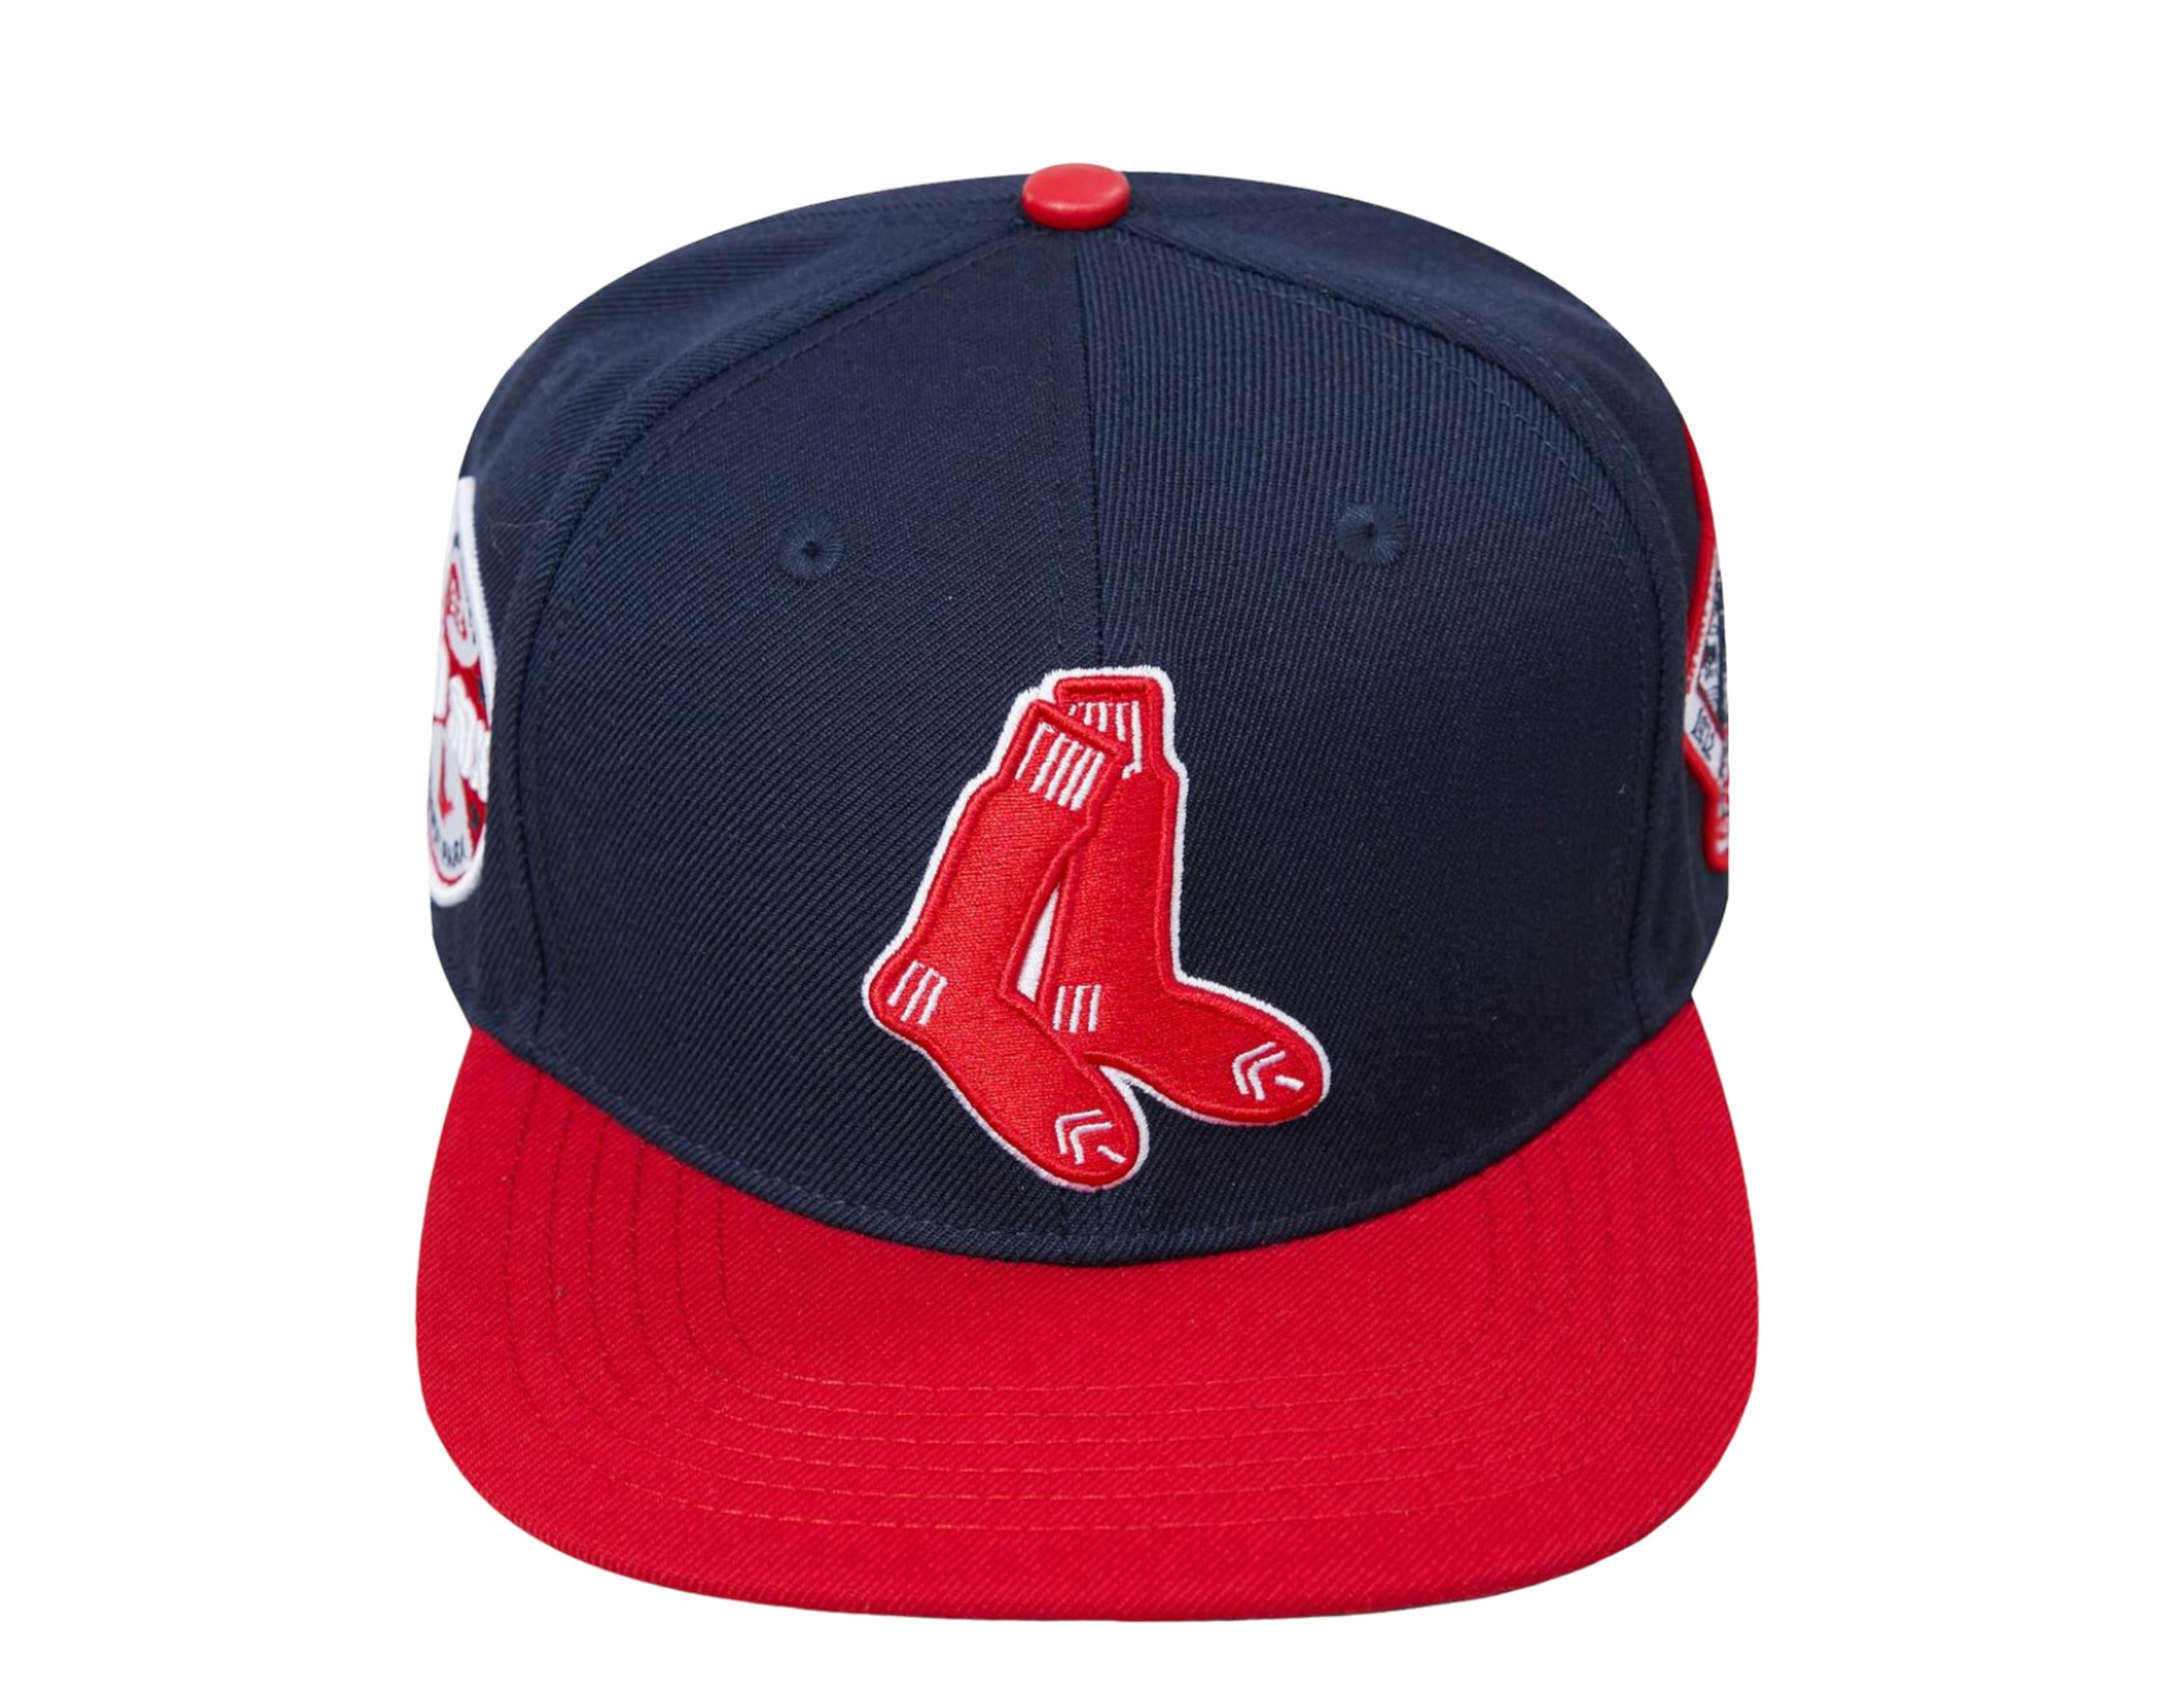 BOSTON RED SOX VINTAGE 70s TWINS MLB BASEBALL SNAPBACK HAT